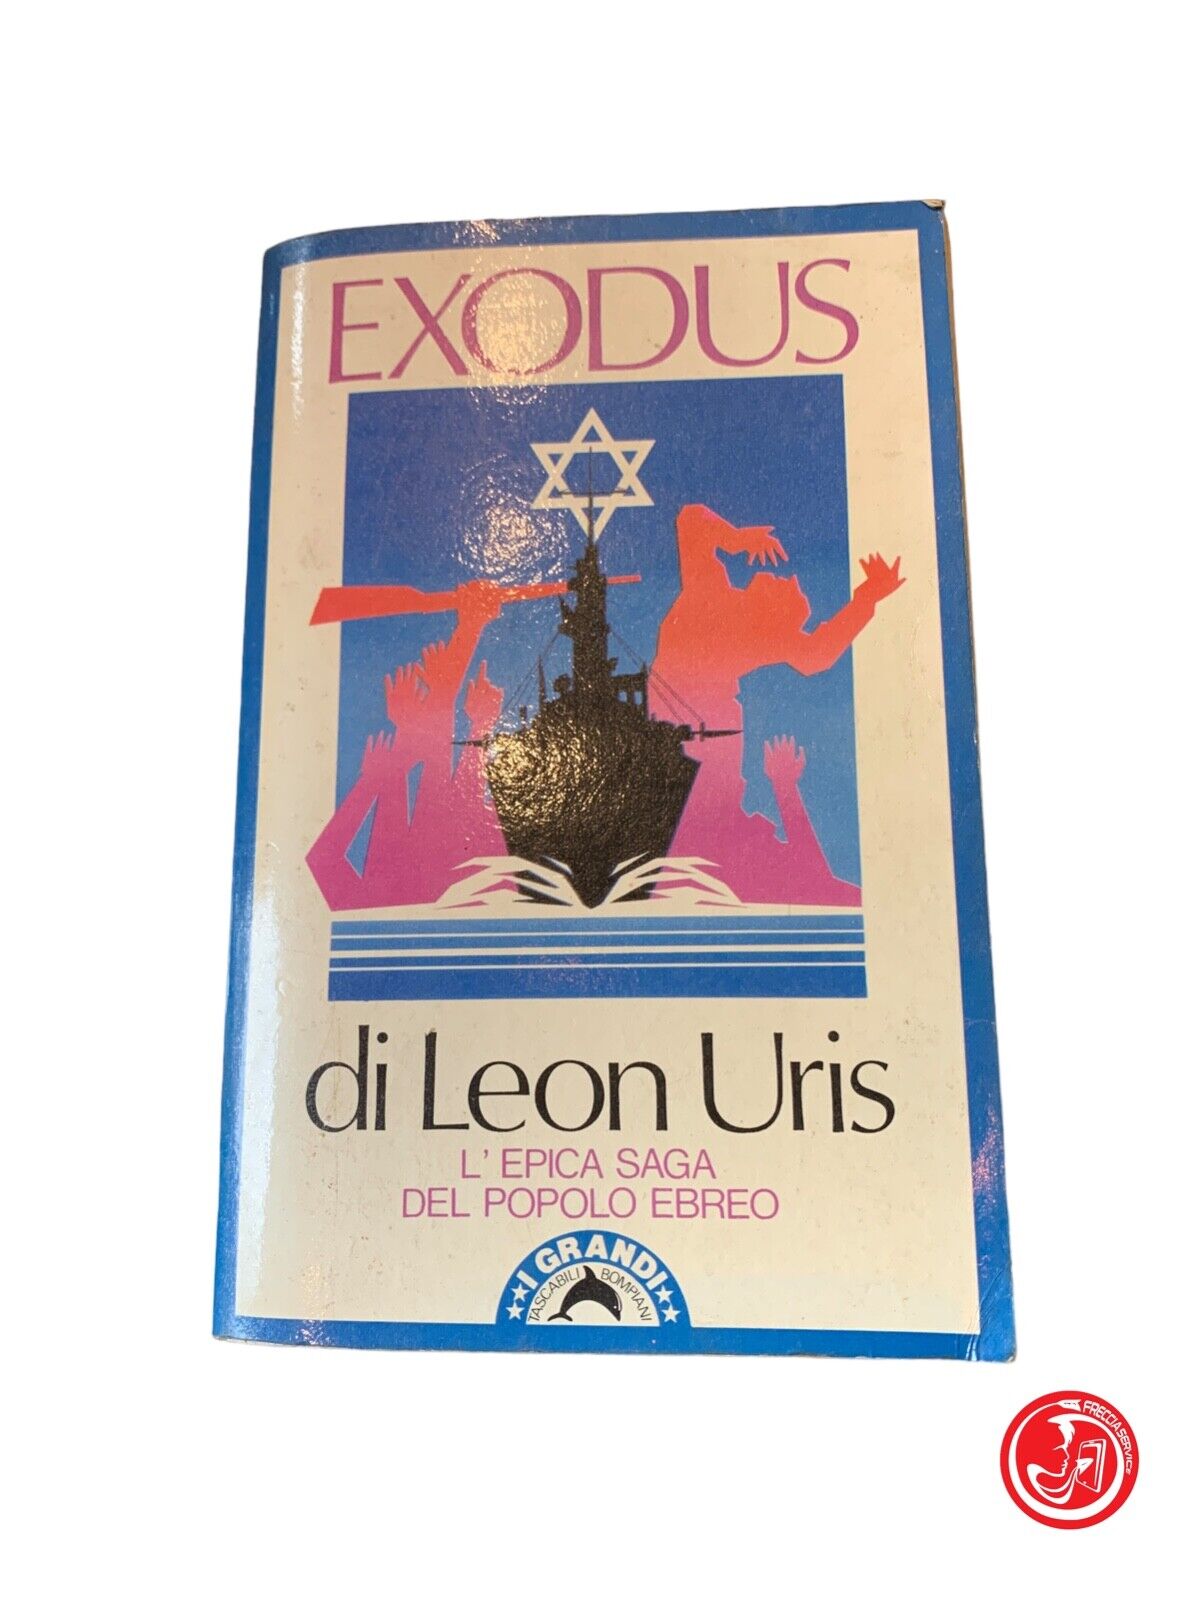 Exodus - Leon Uris - Bonpiani 1988